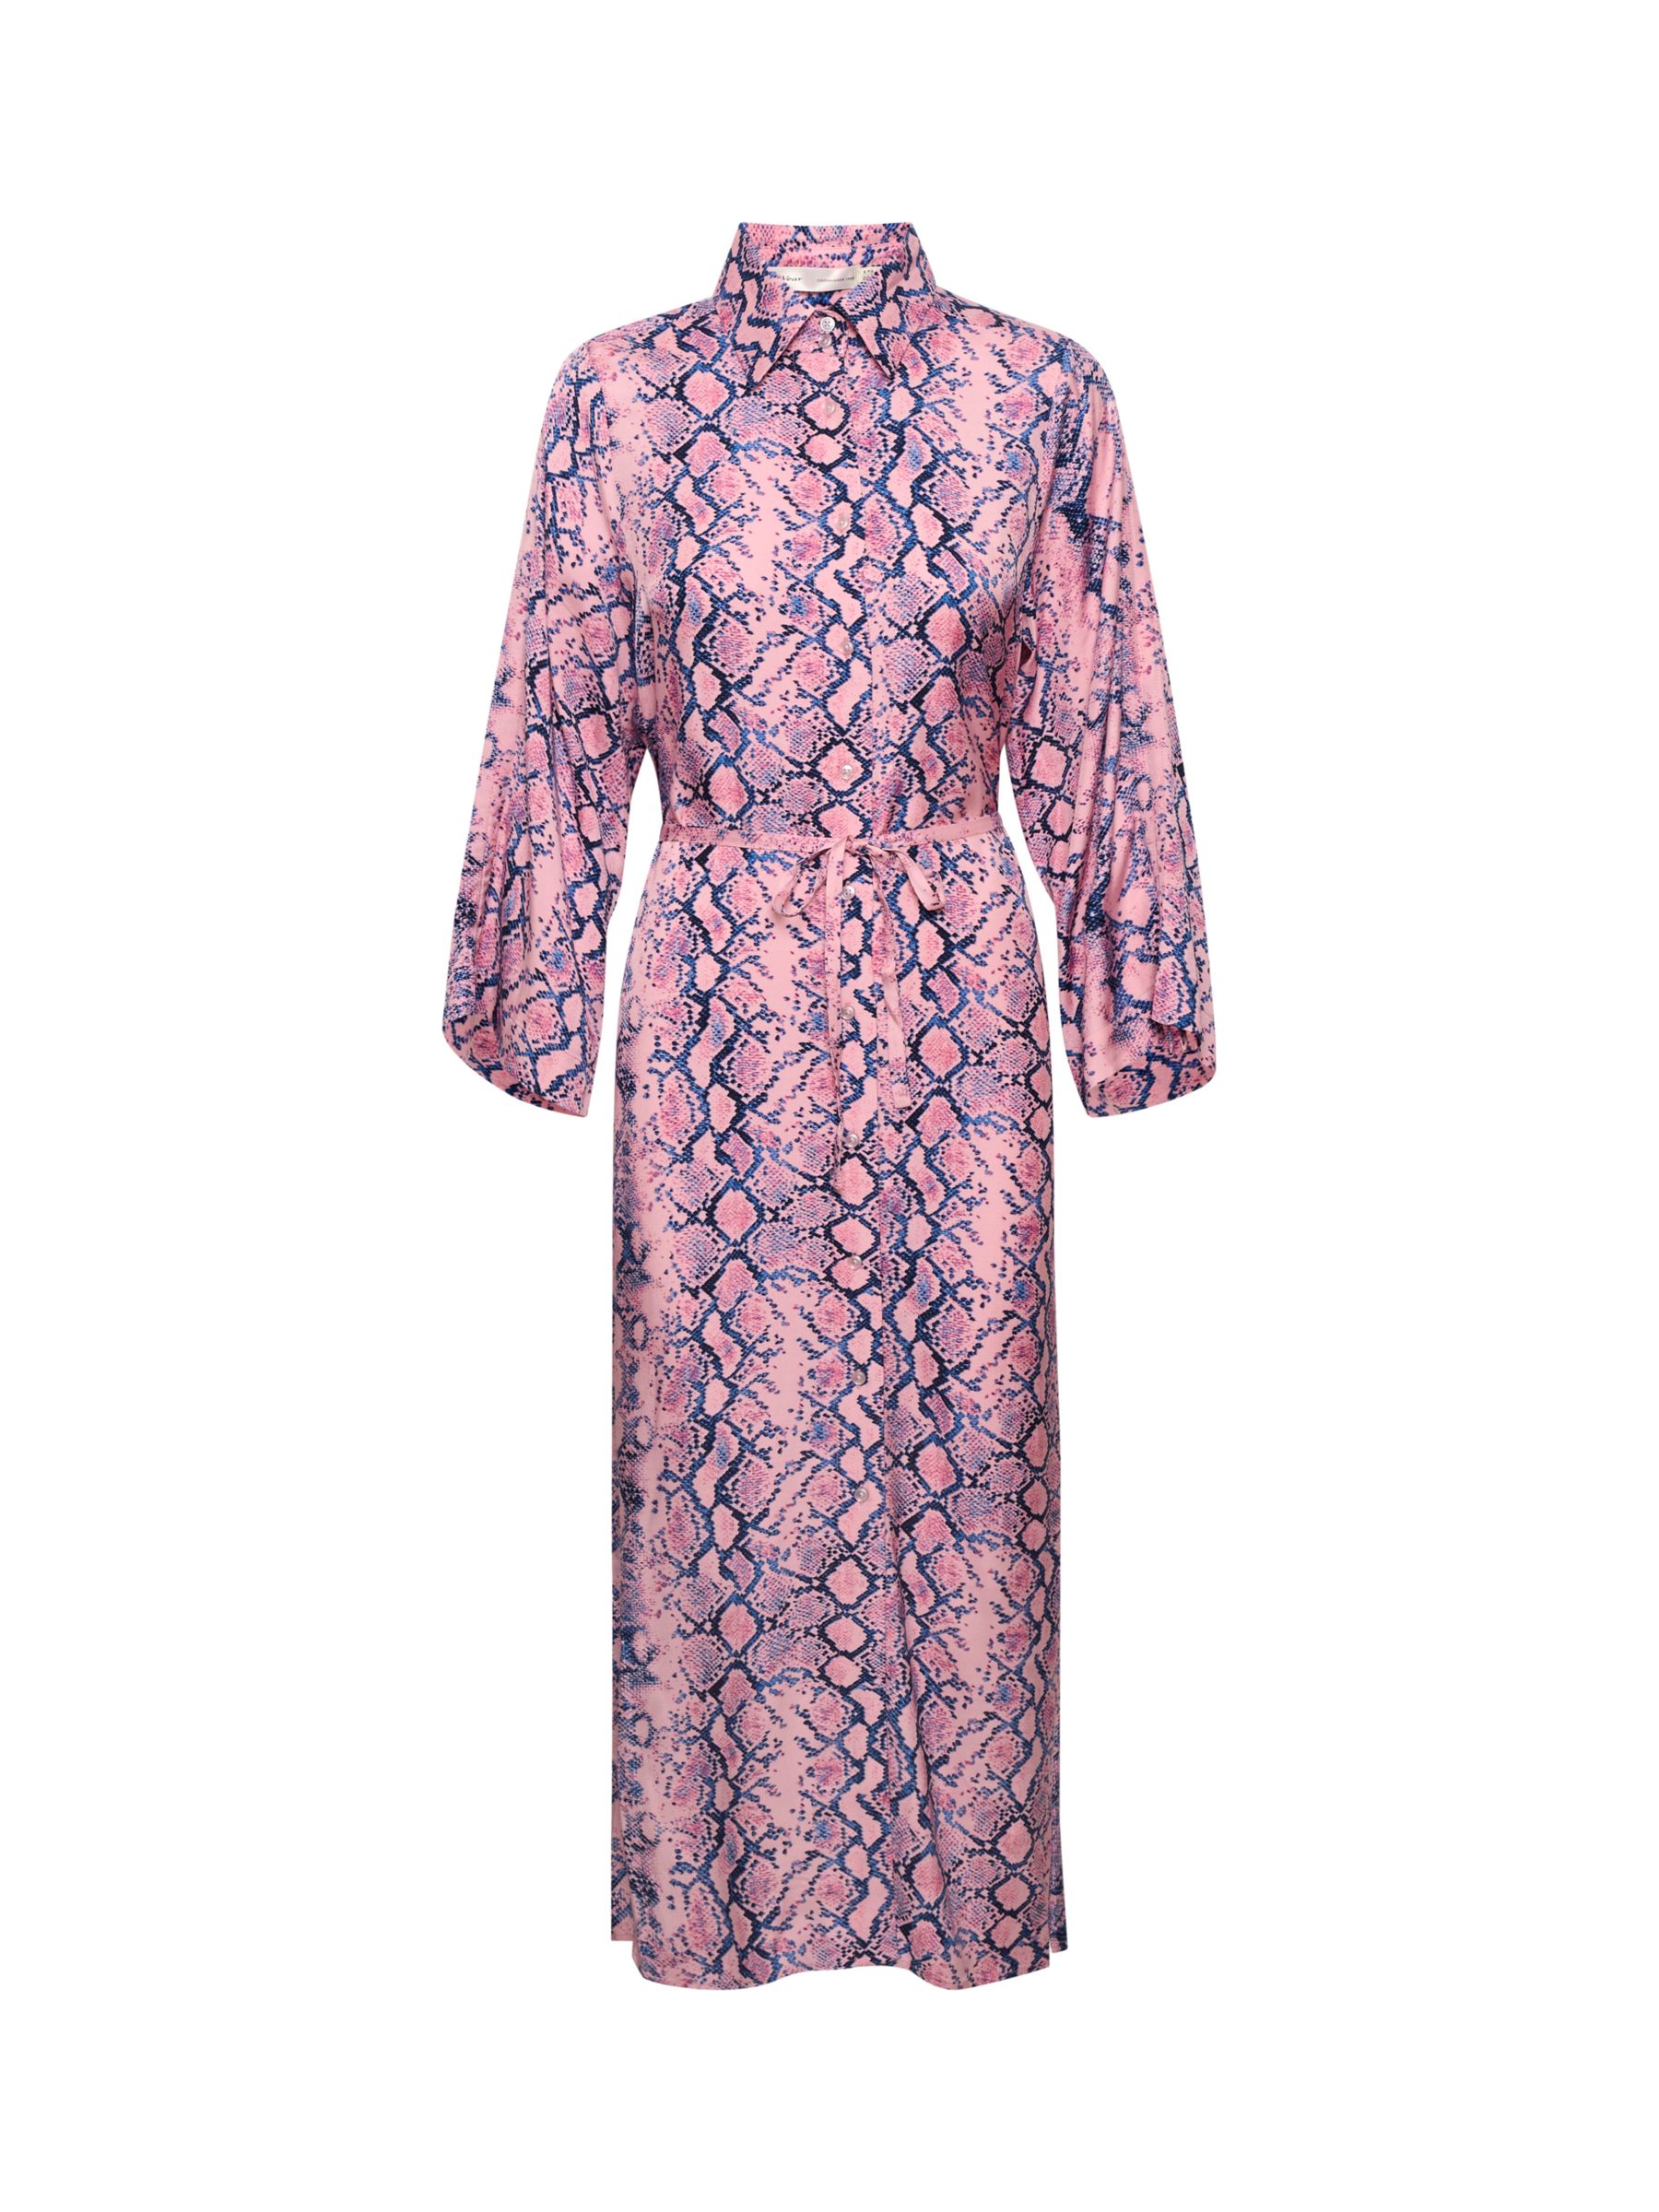 InWear Dwyn Relaxed Fit Snake Print Dress, Pink at John Lewis & Partners